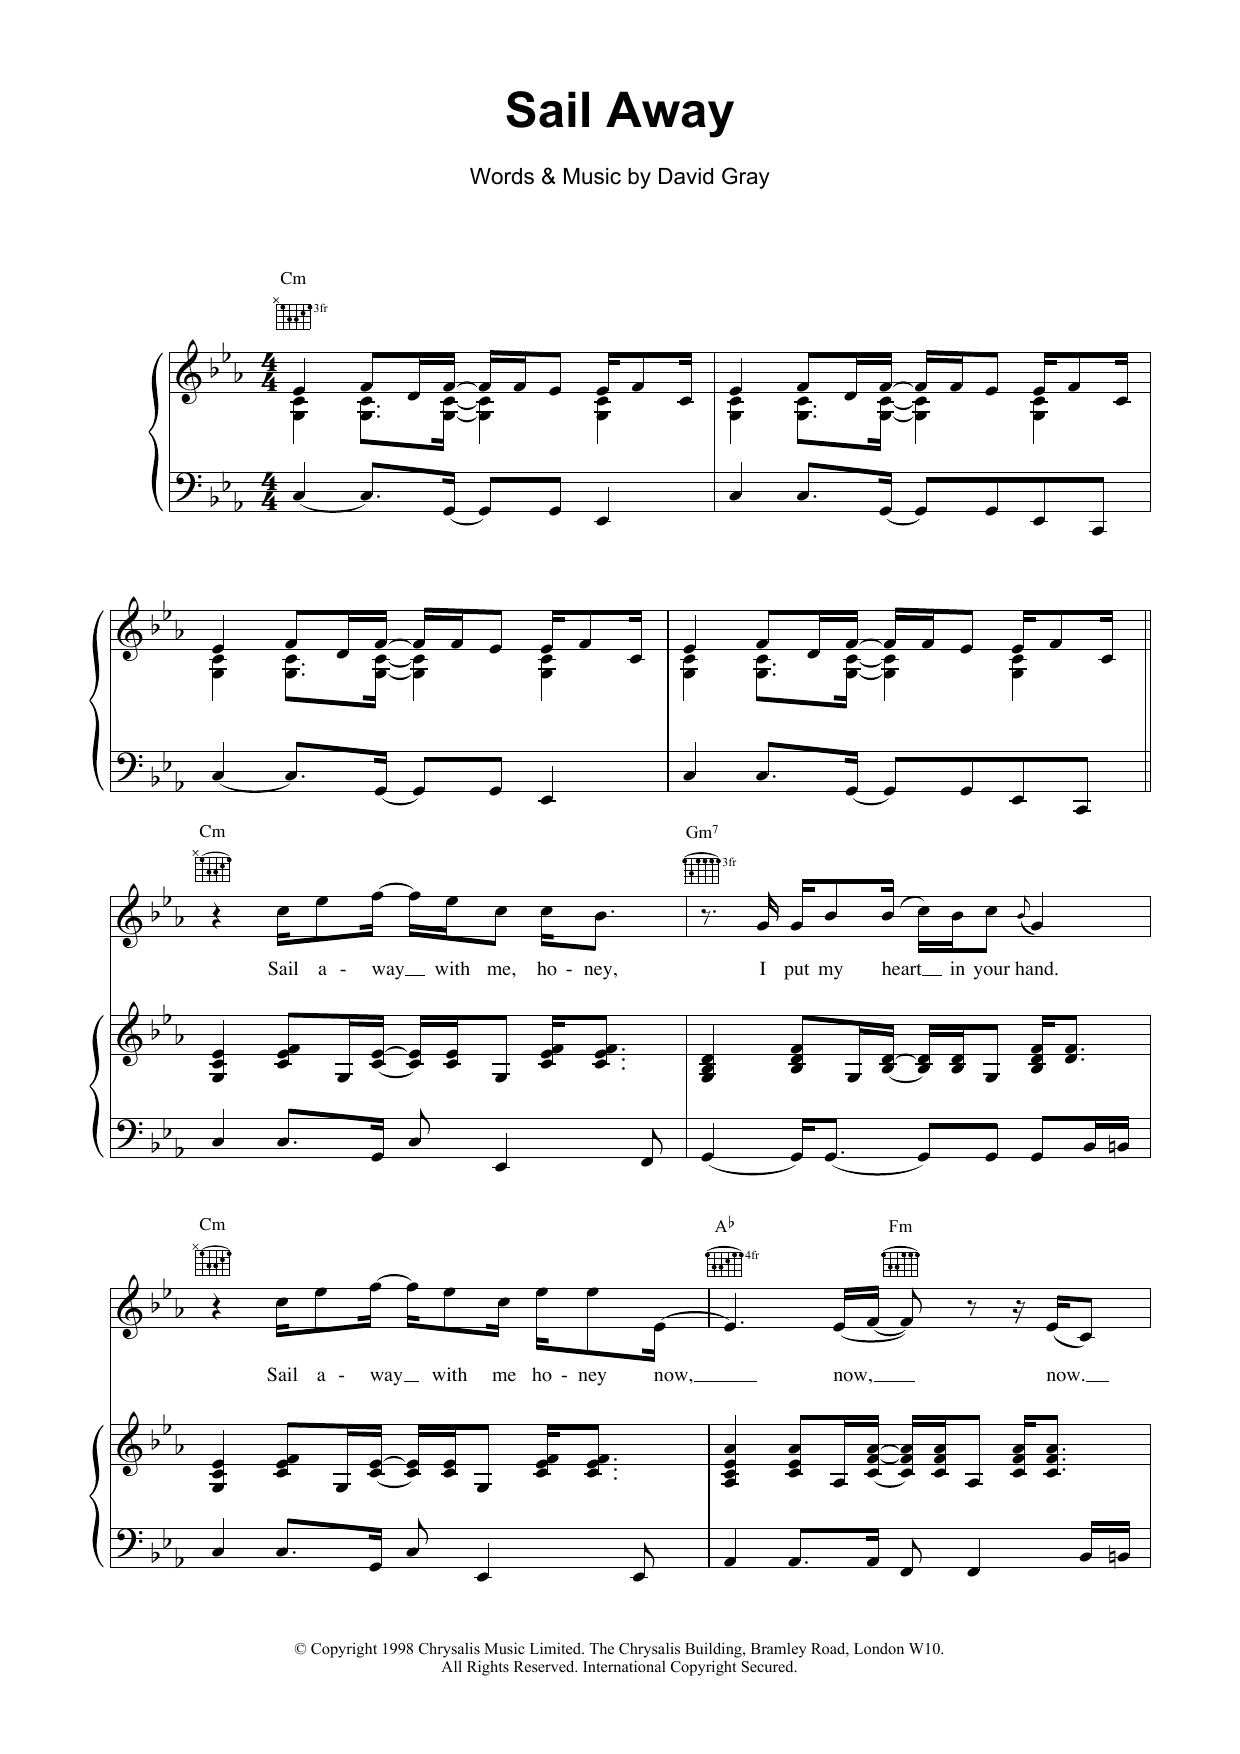 David Gray Sail Away Sheet Music Notes & Chords for Flute - Download or Print PDF